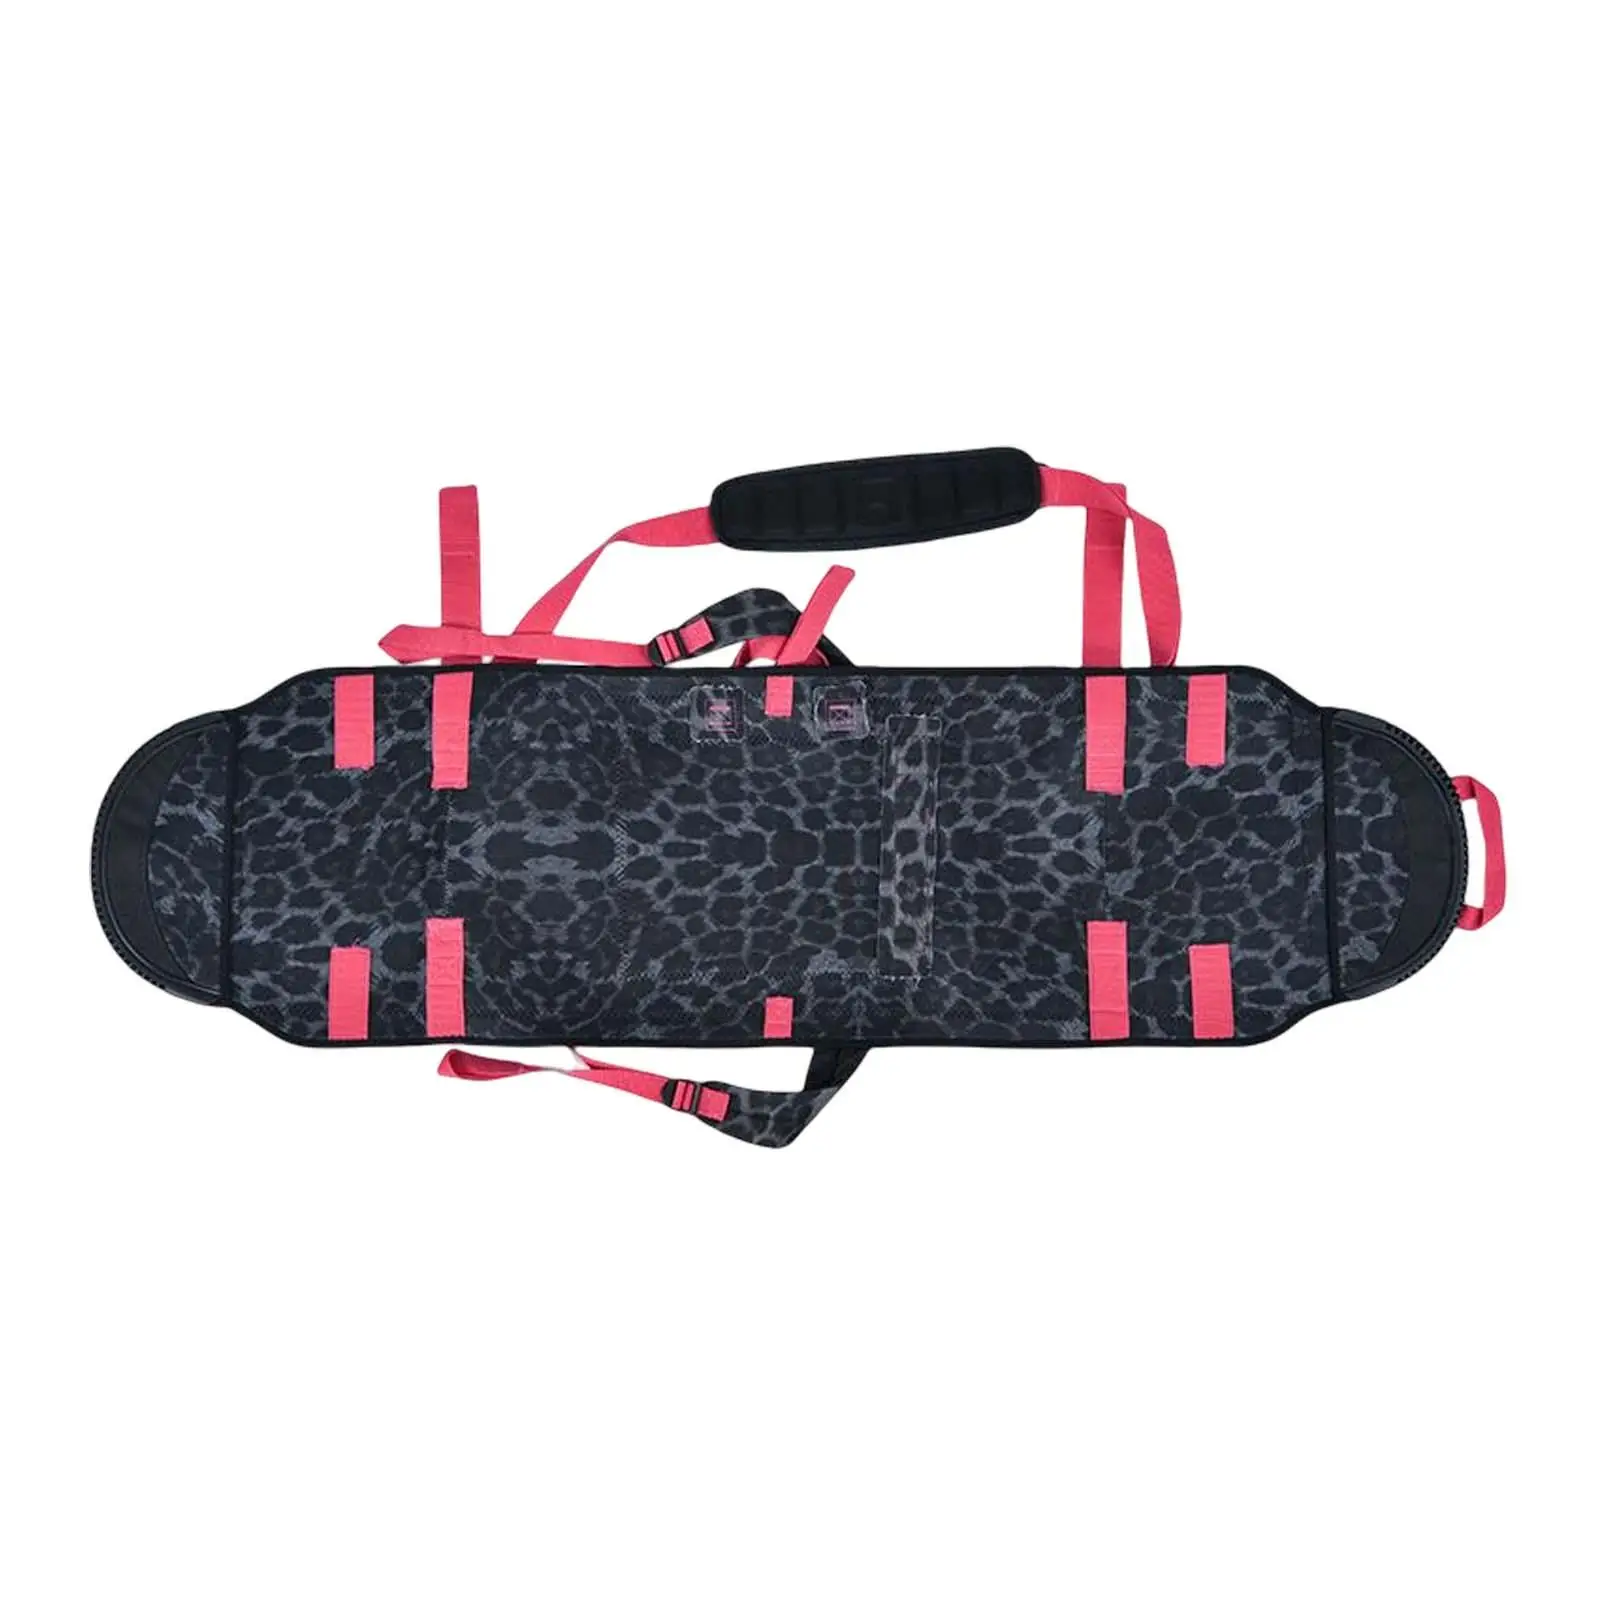 Neoprene Ski Storage Bag Skiing Equipment Suitcase Adjustable Shoulder Strap Snowboard Sleeve Cover Case for Trip Longboard